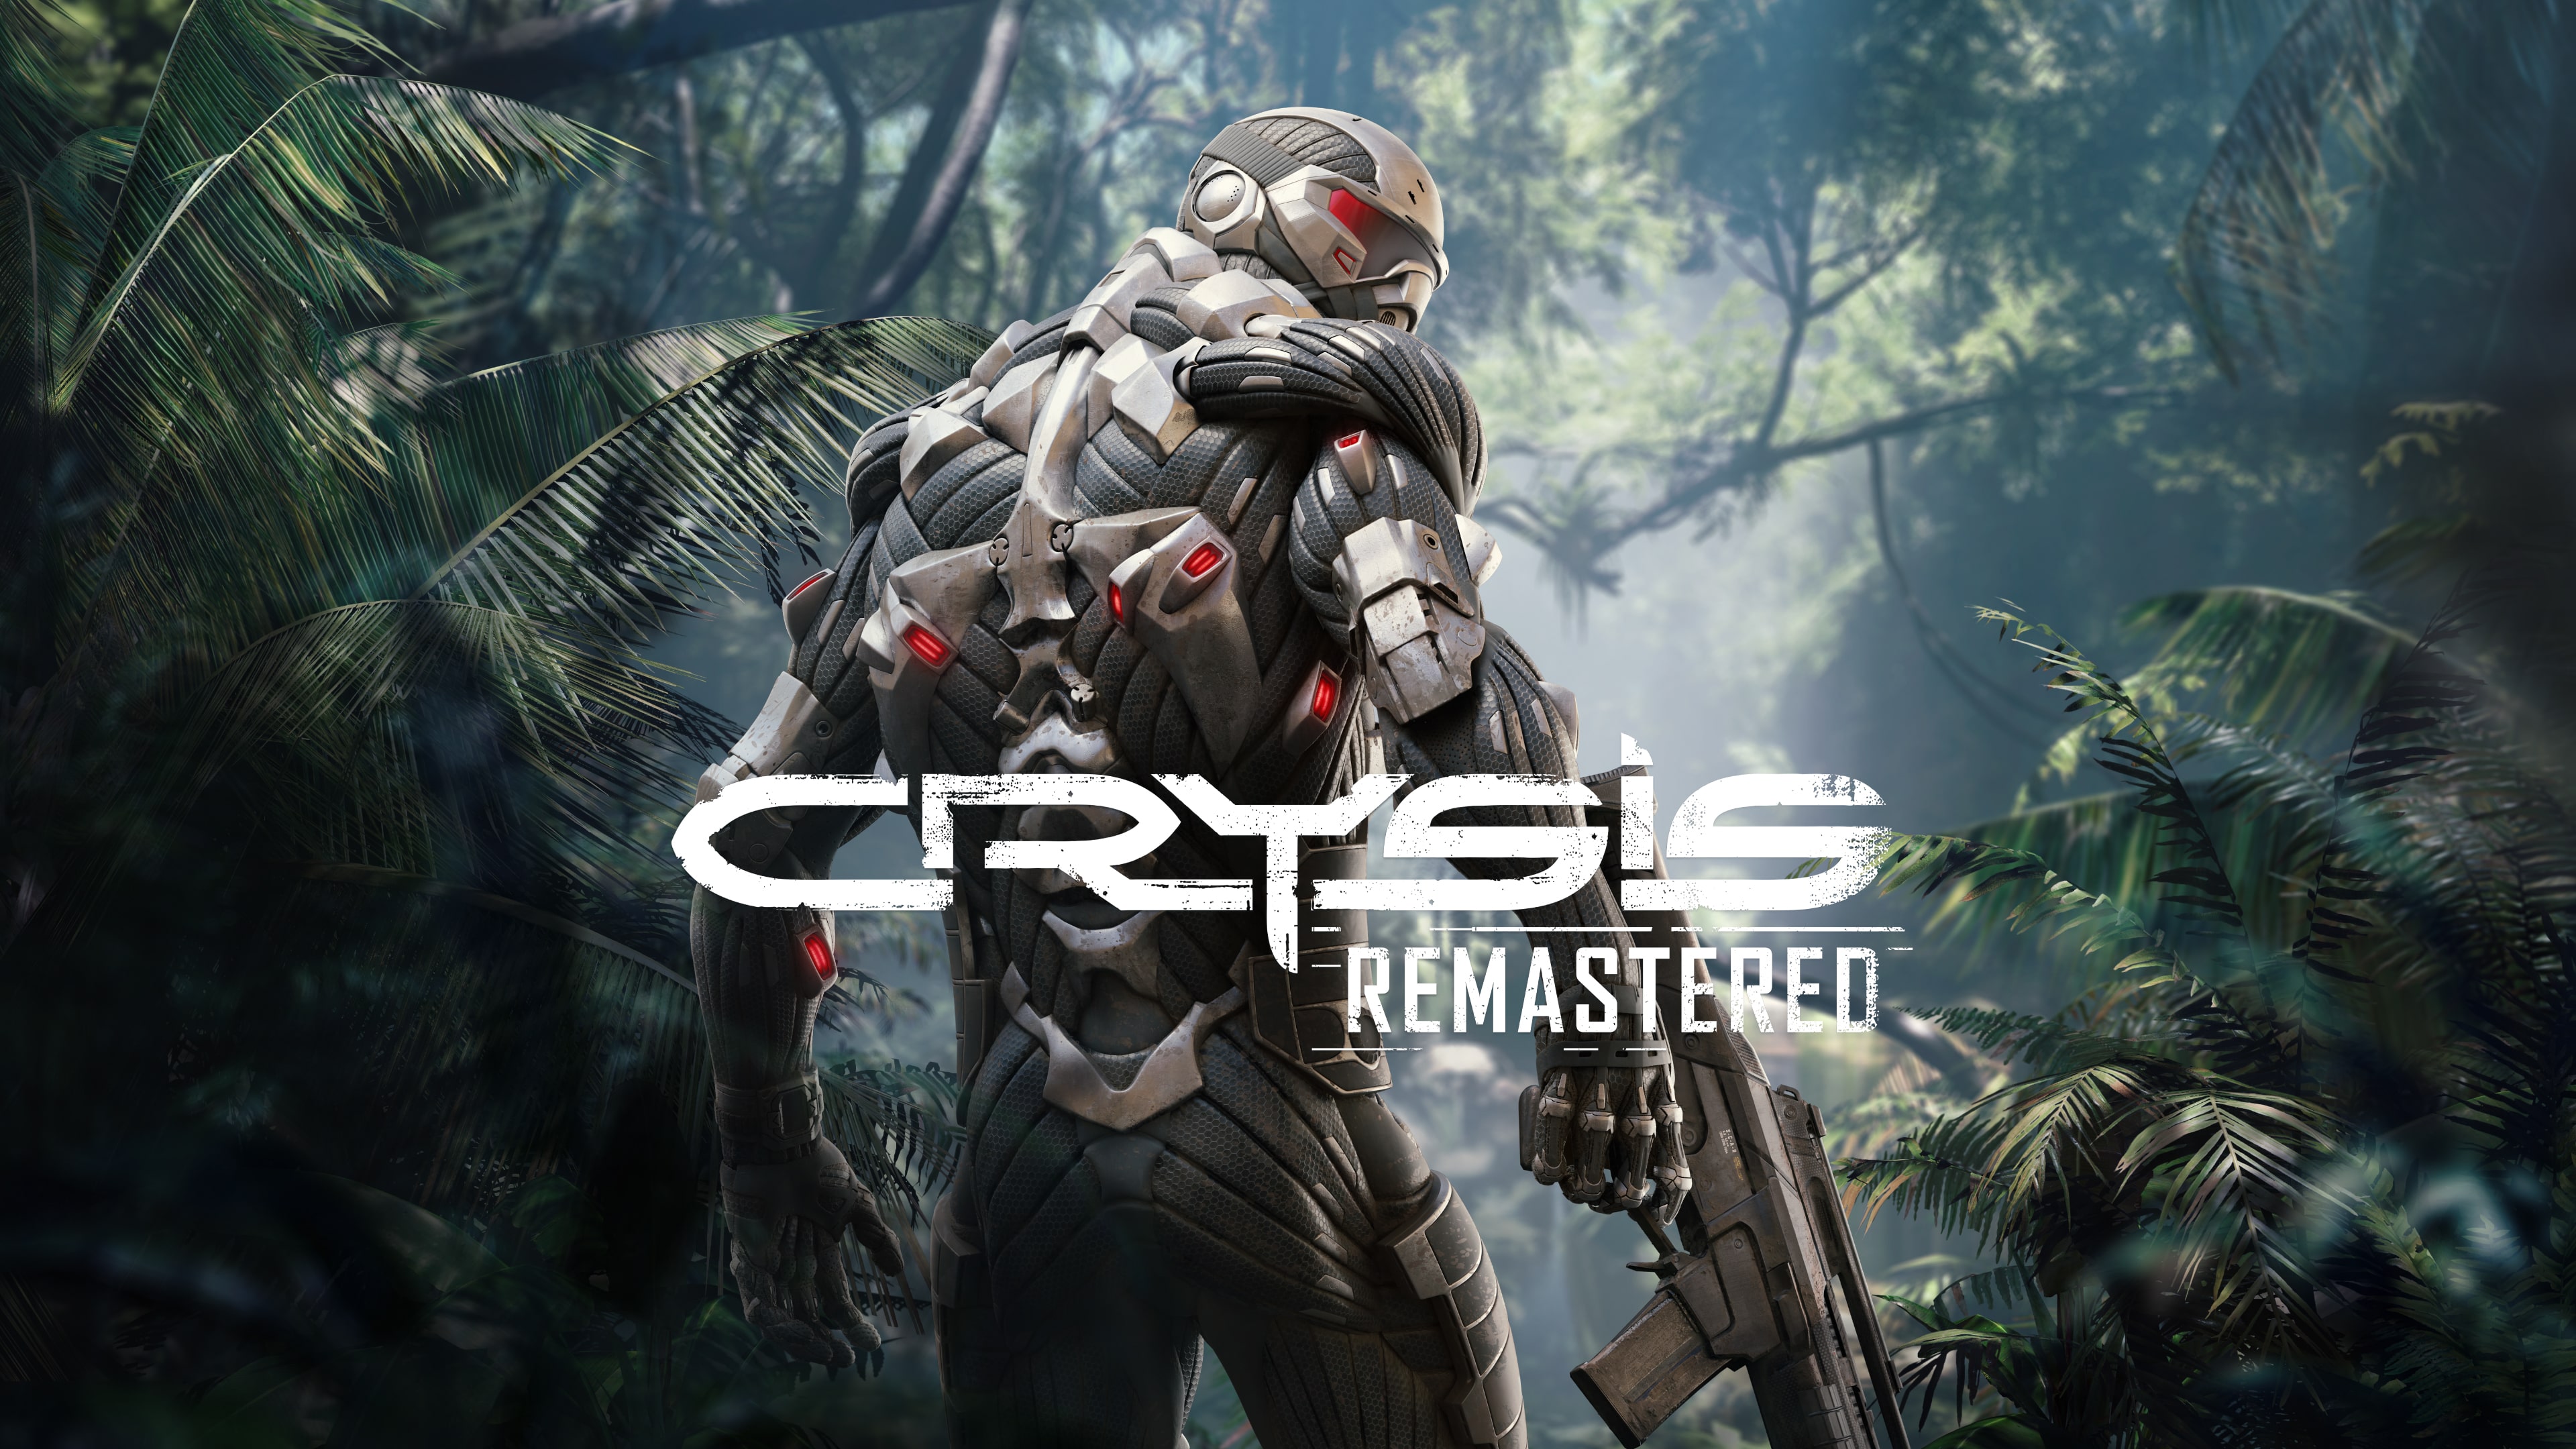 Crysis Remastered (English, Japanese)